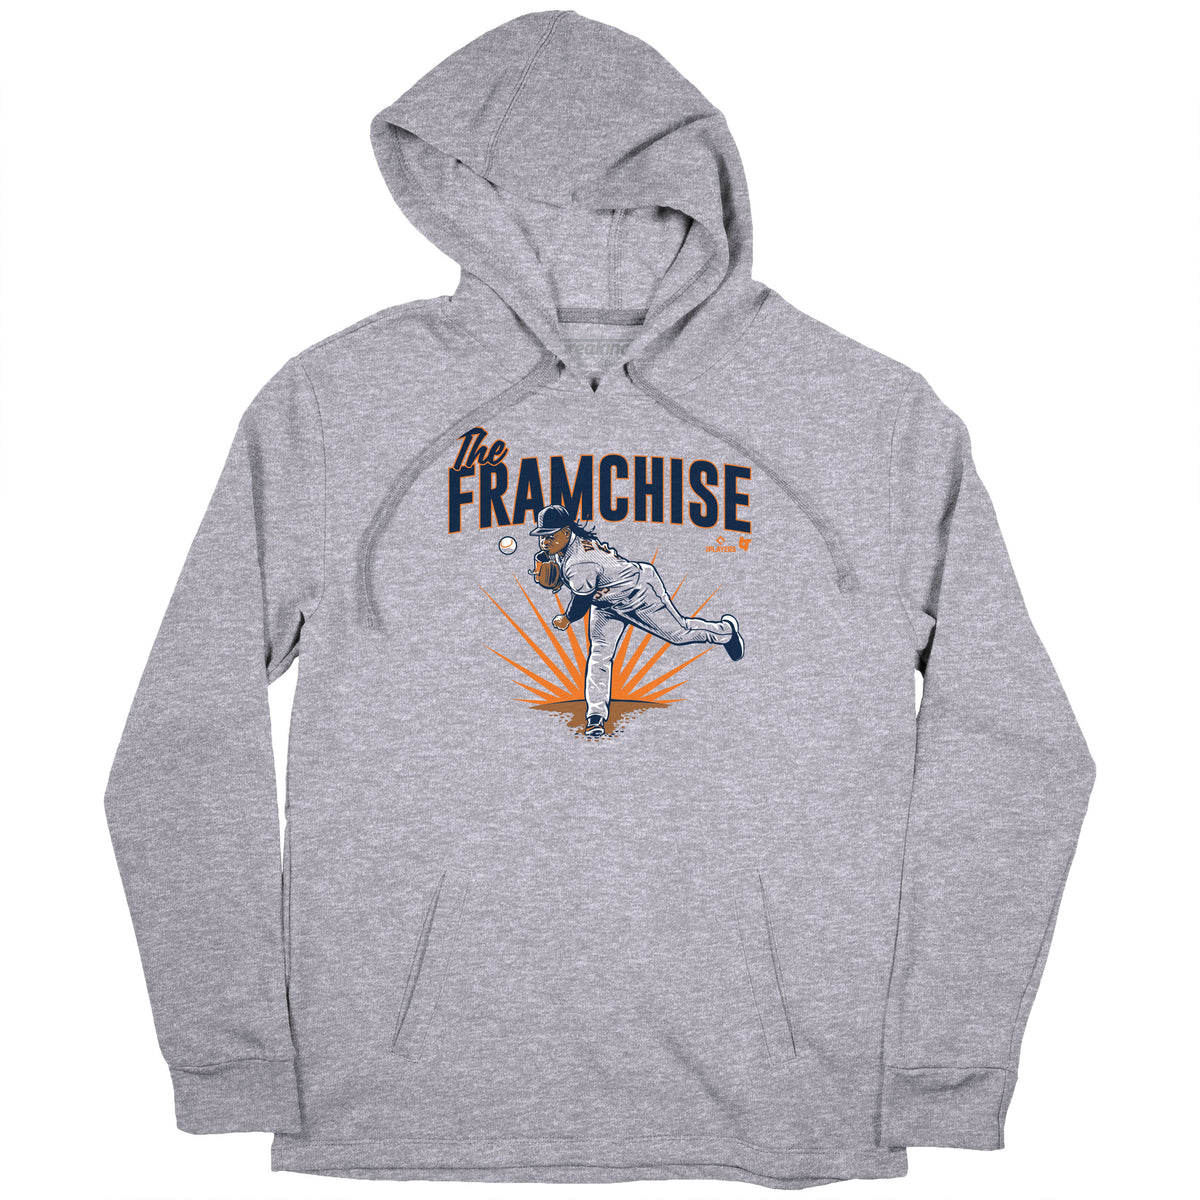 Official framber valdez limited edition shirt, hoodie, sweatshirt